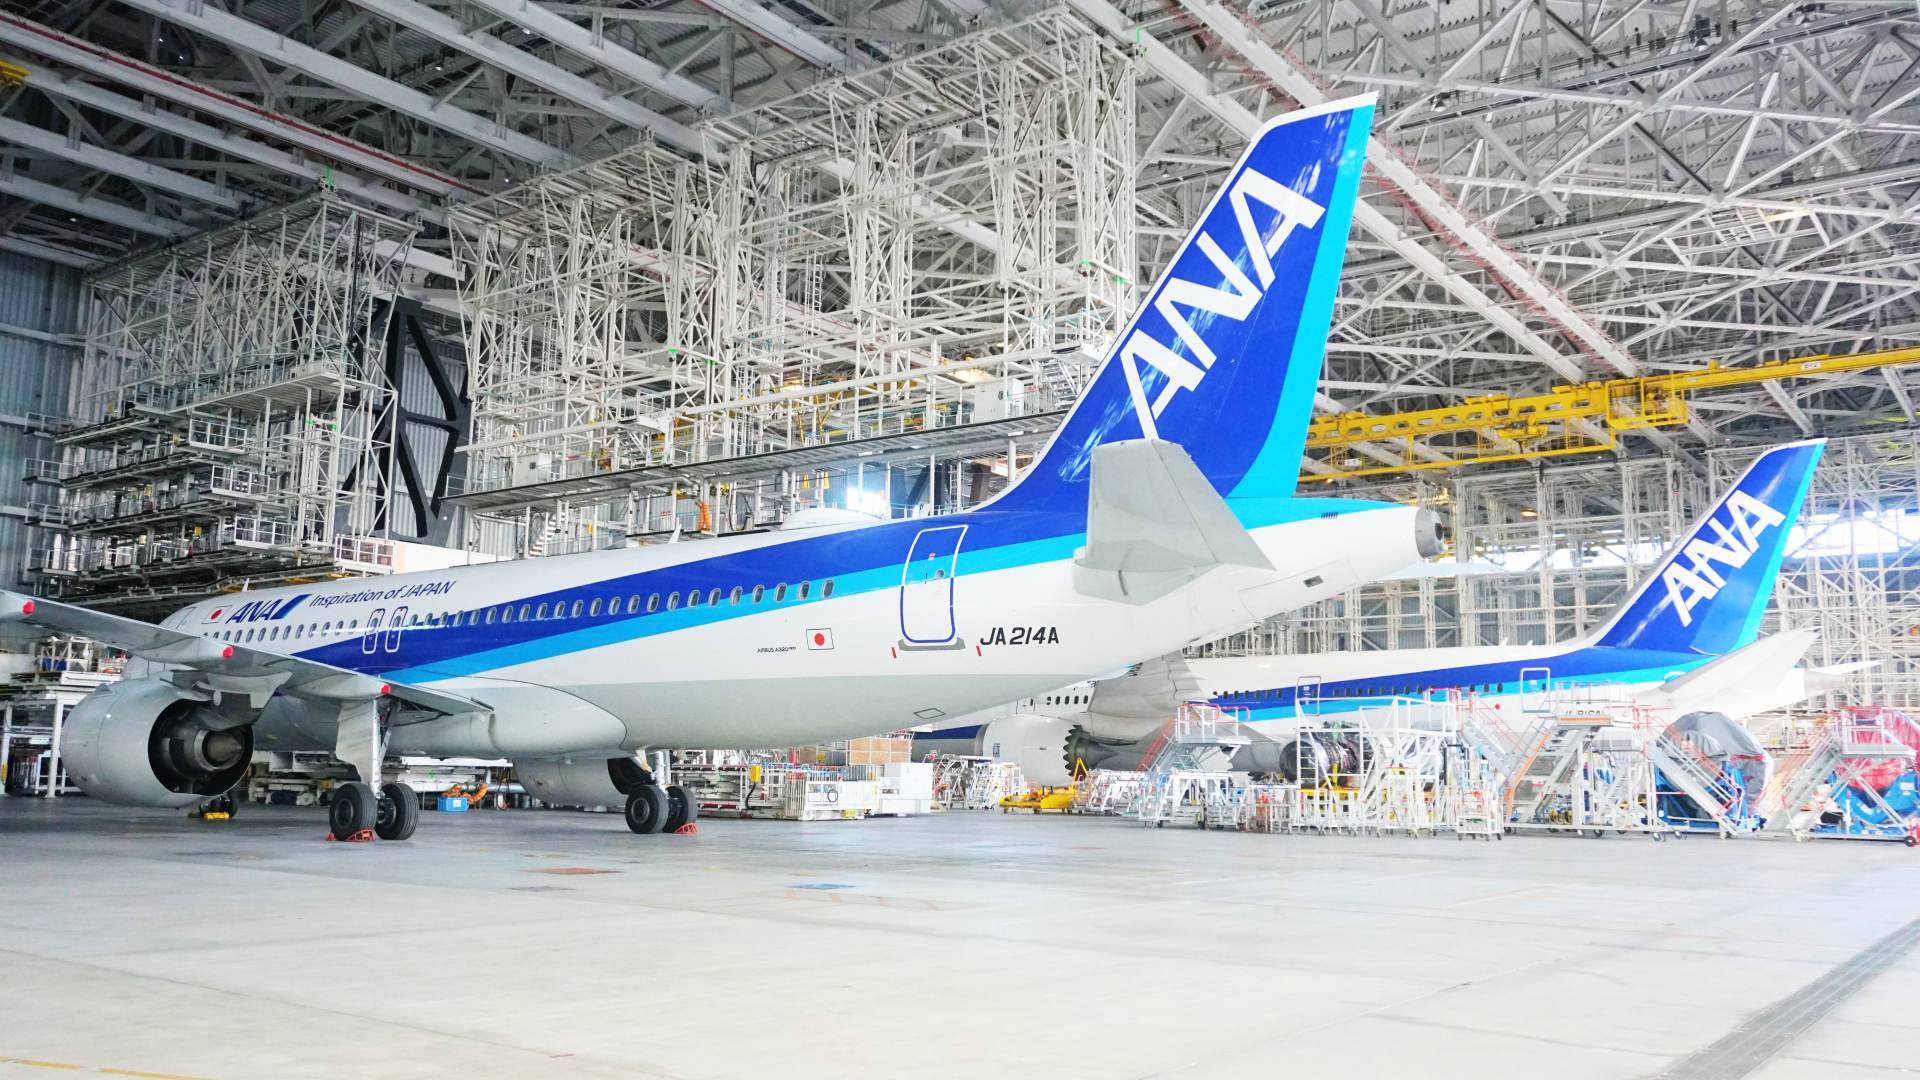 ANA Blue Hangar Tour 見学ツアー ANAツールボックス 美しい - 航空機 